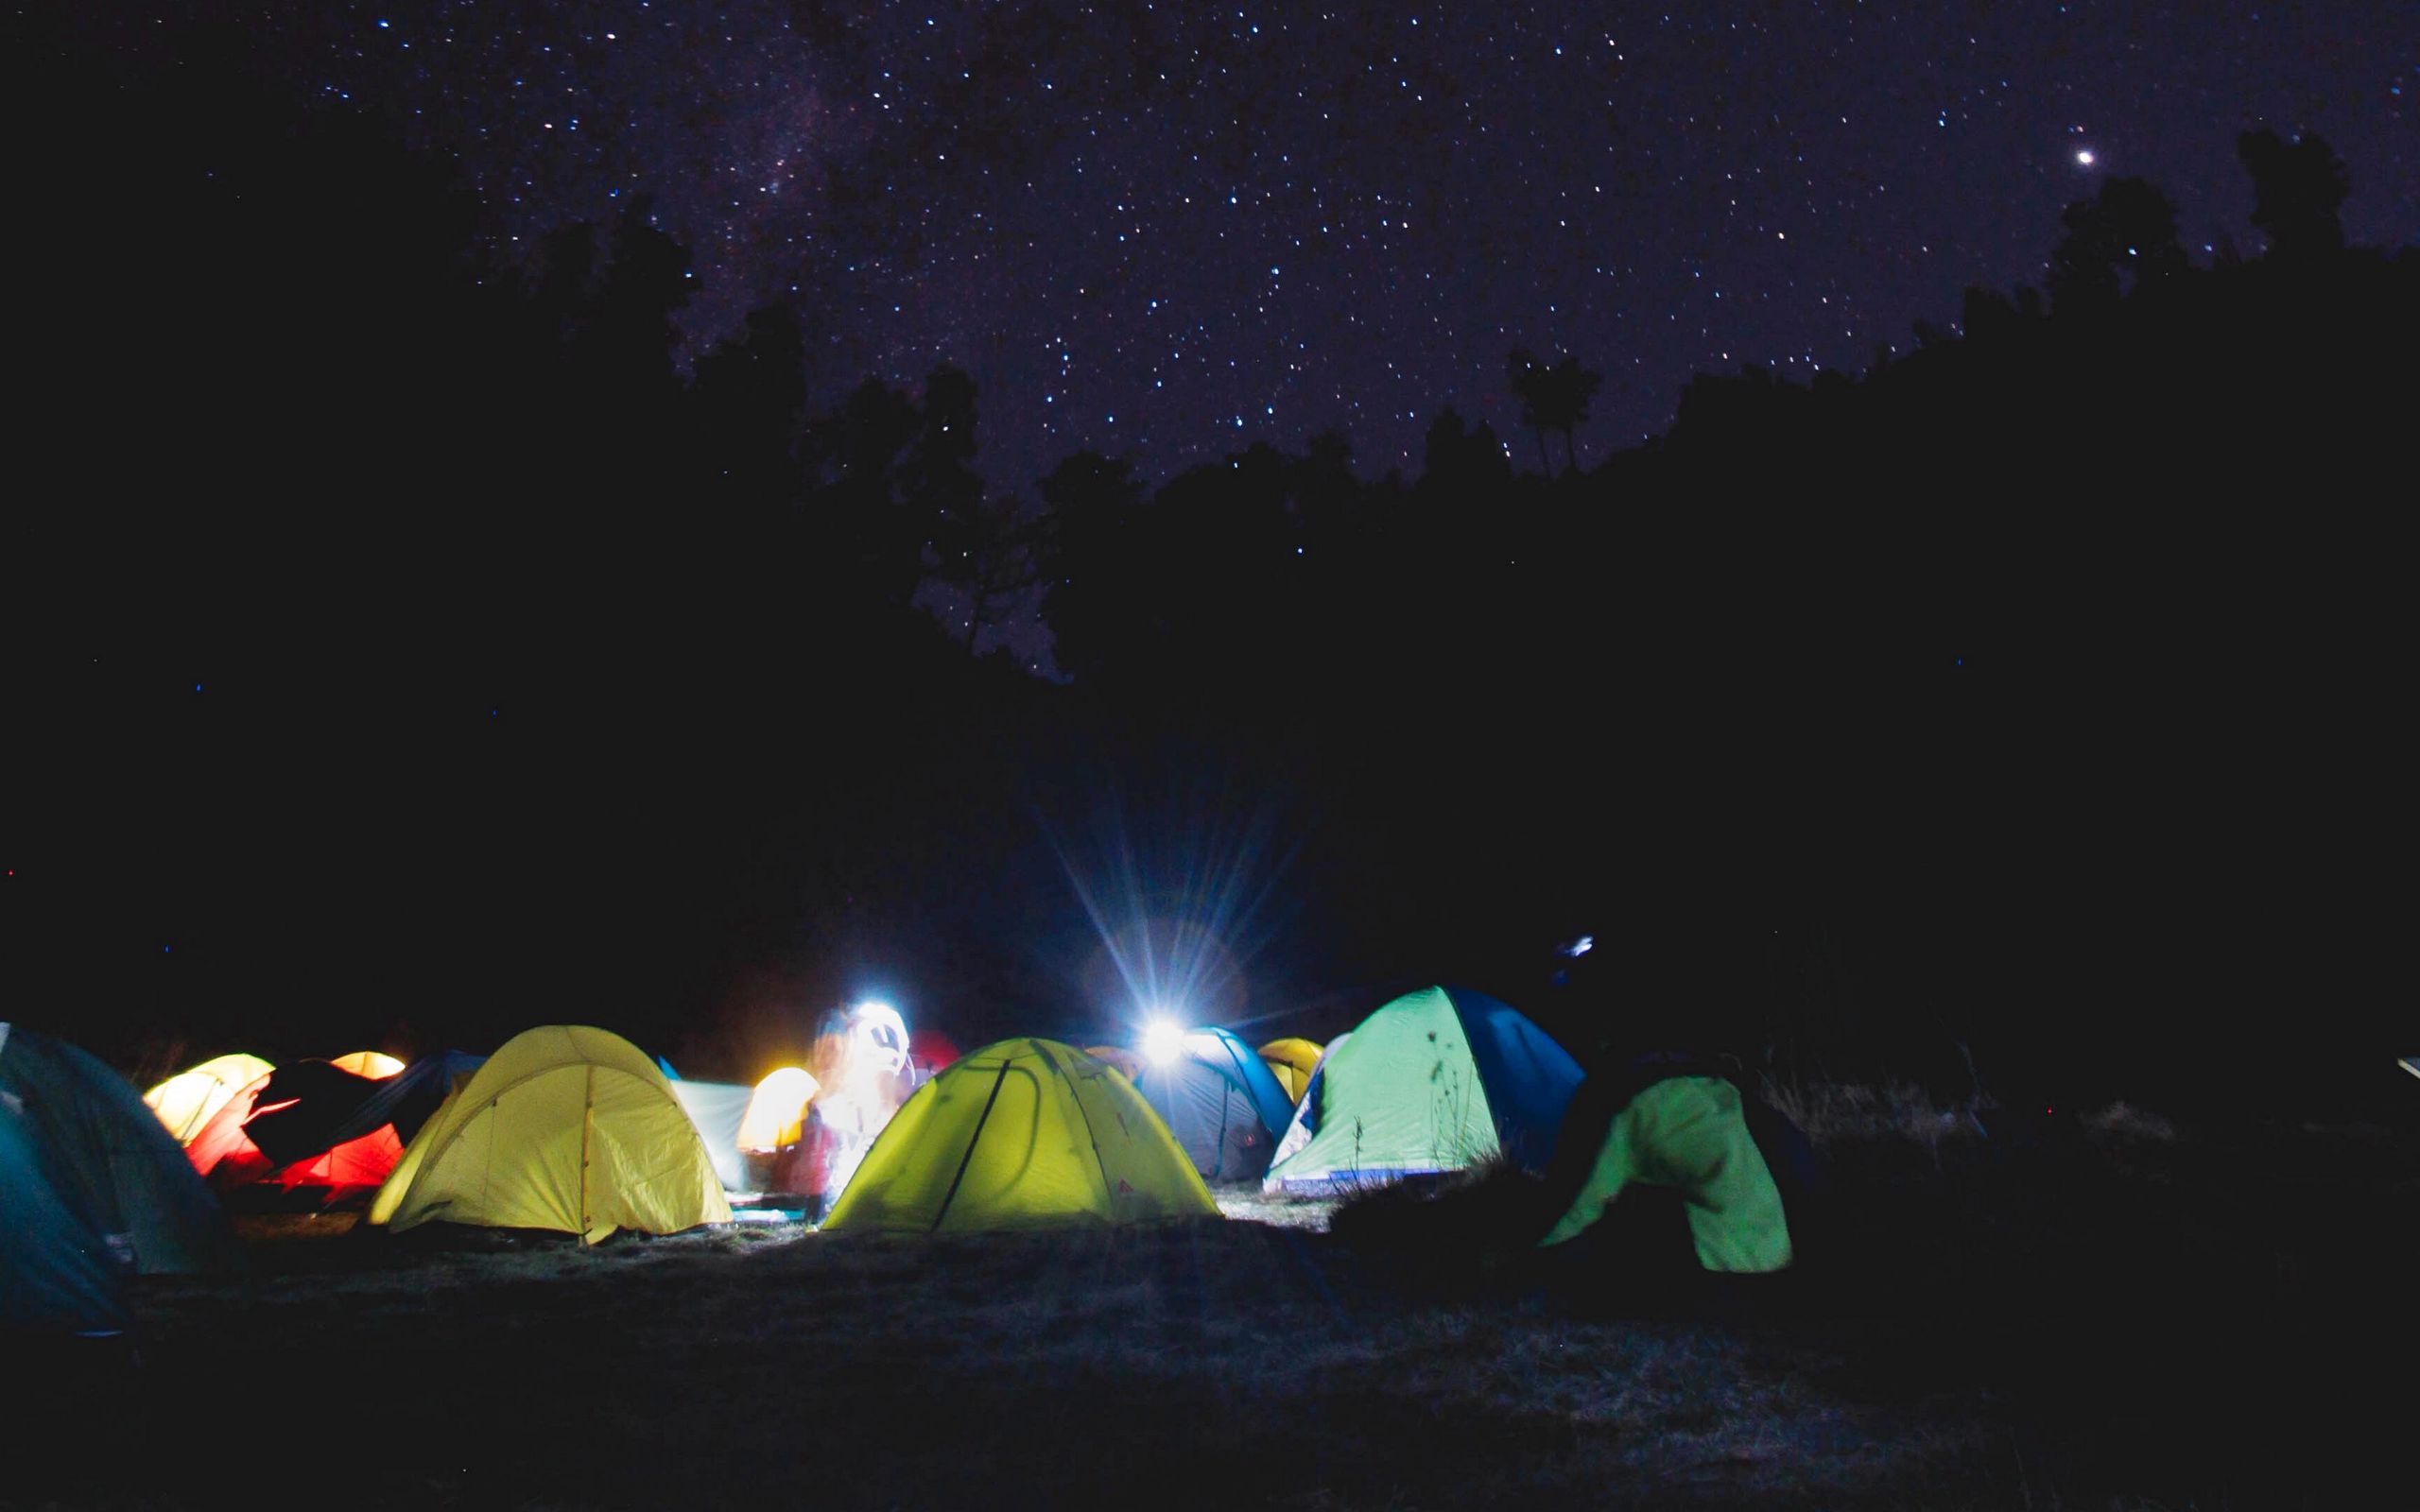 Night camp. Палатка в лесу ночью. Звездное небо и палатка. Палатка под звездным небом. Звёздное небо вид и палатки.